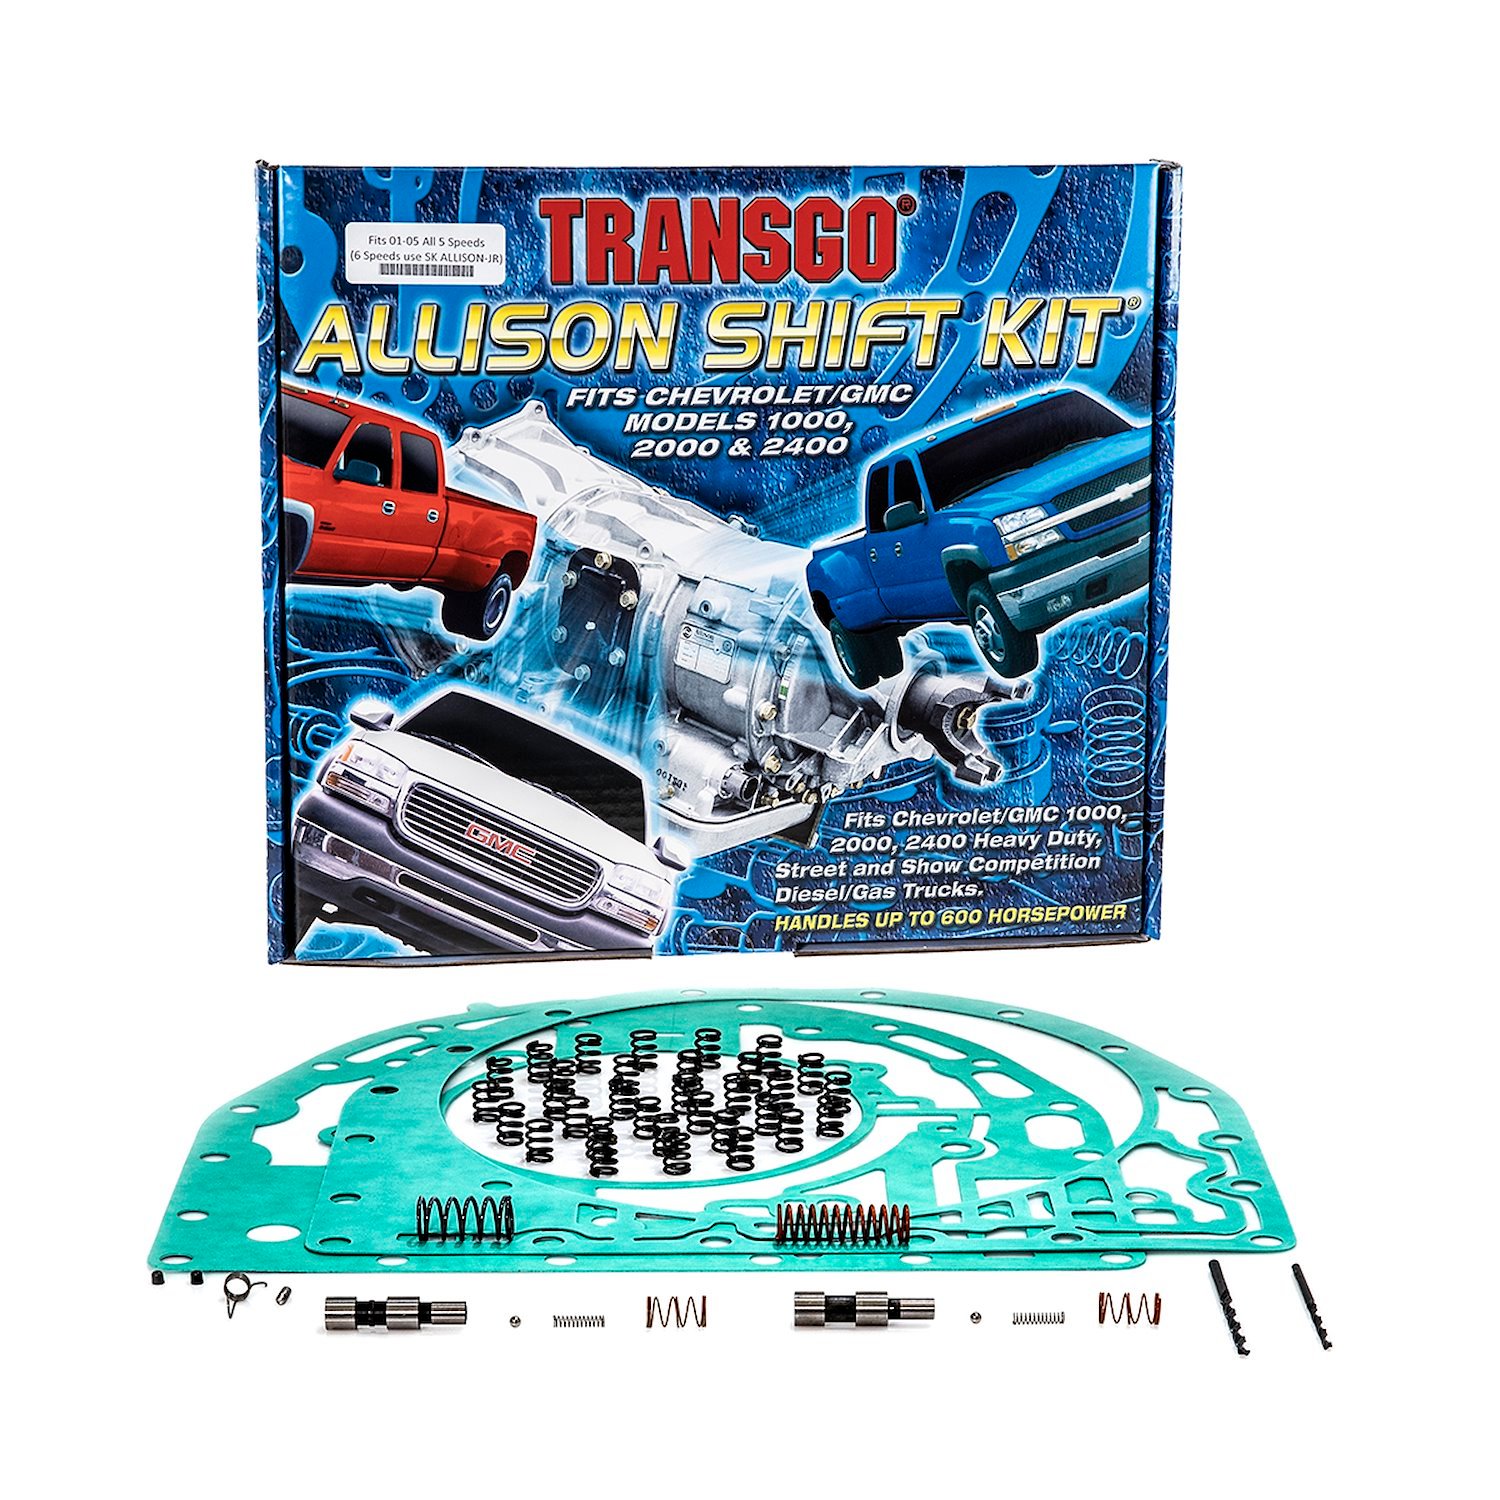 Valve Body Shift Kit 2001-2005 Allison 5-Speed